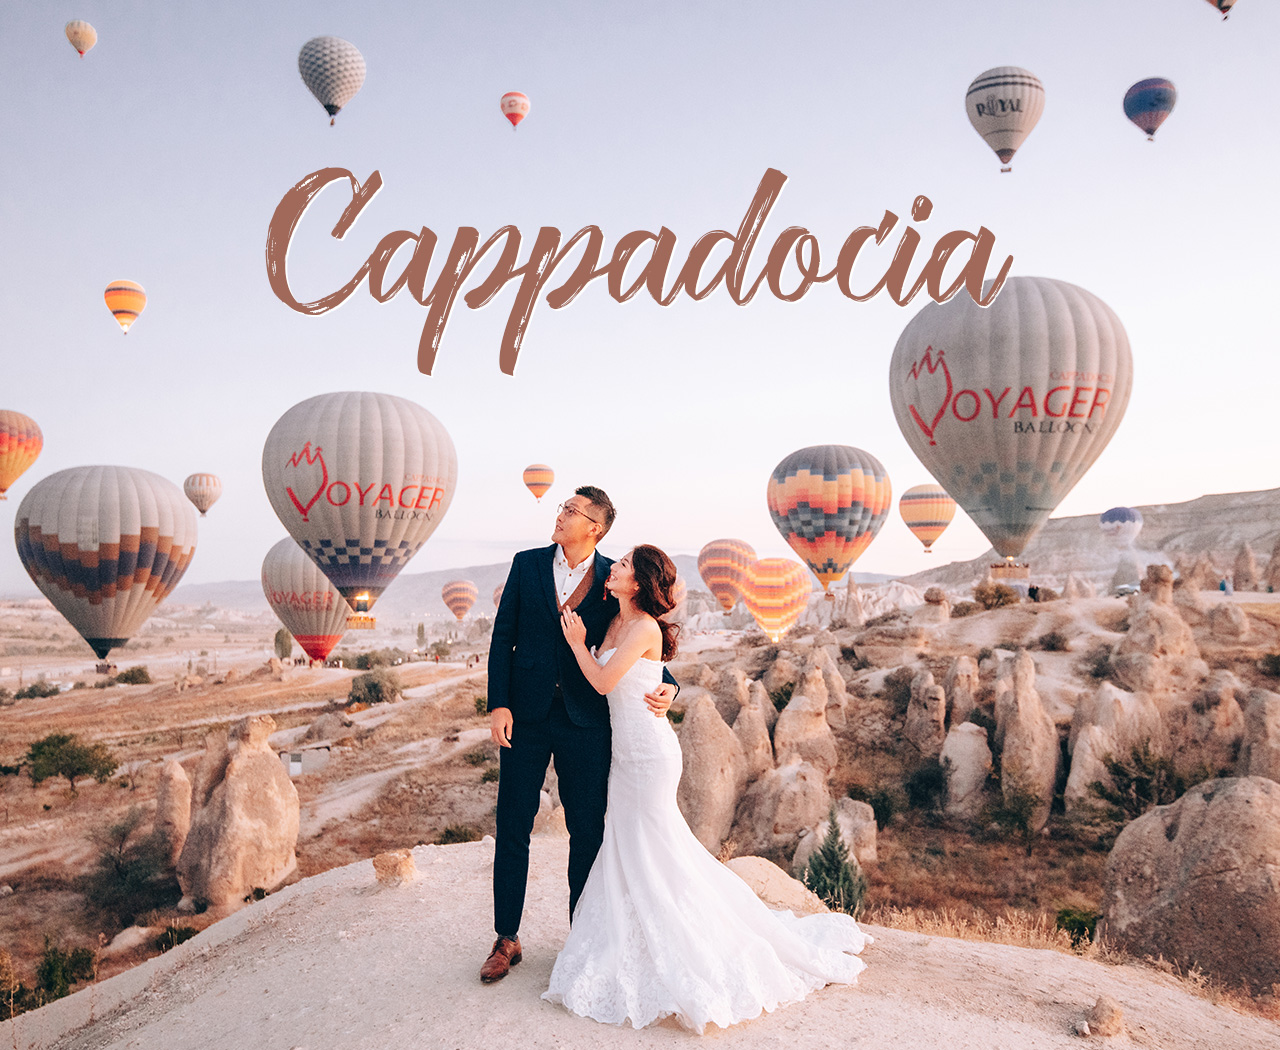 Cappadocia Turkey Pre-Wedding Photoshoot Promotion